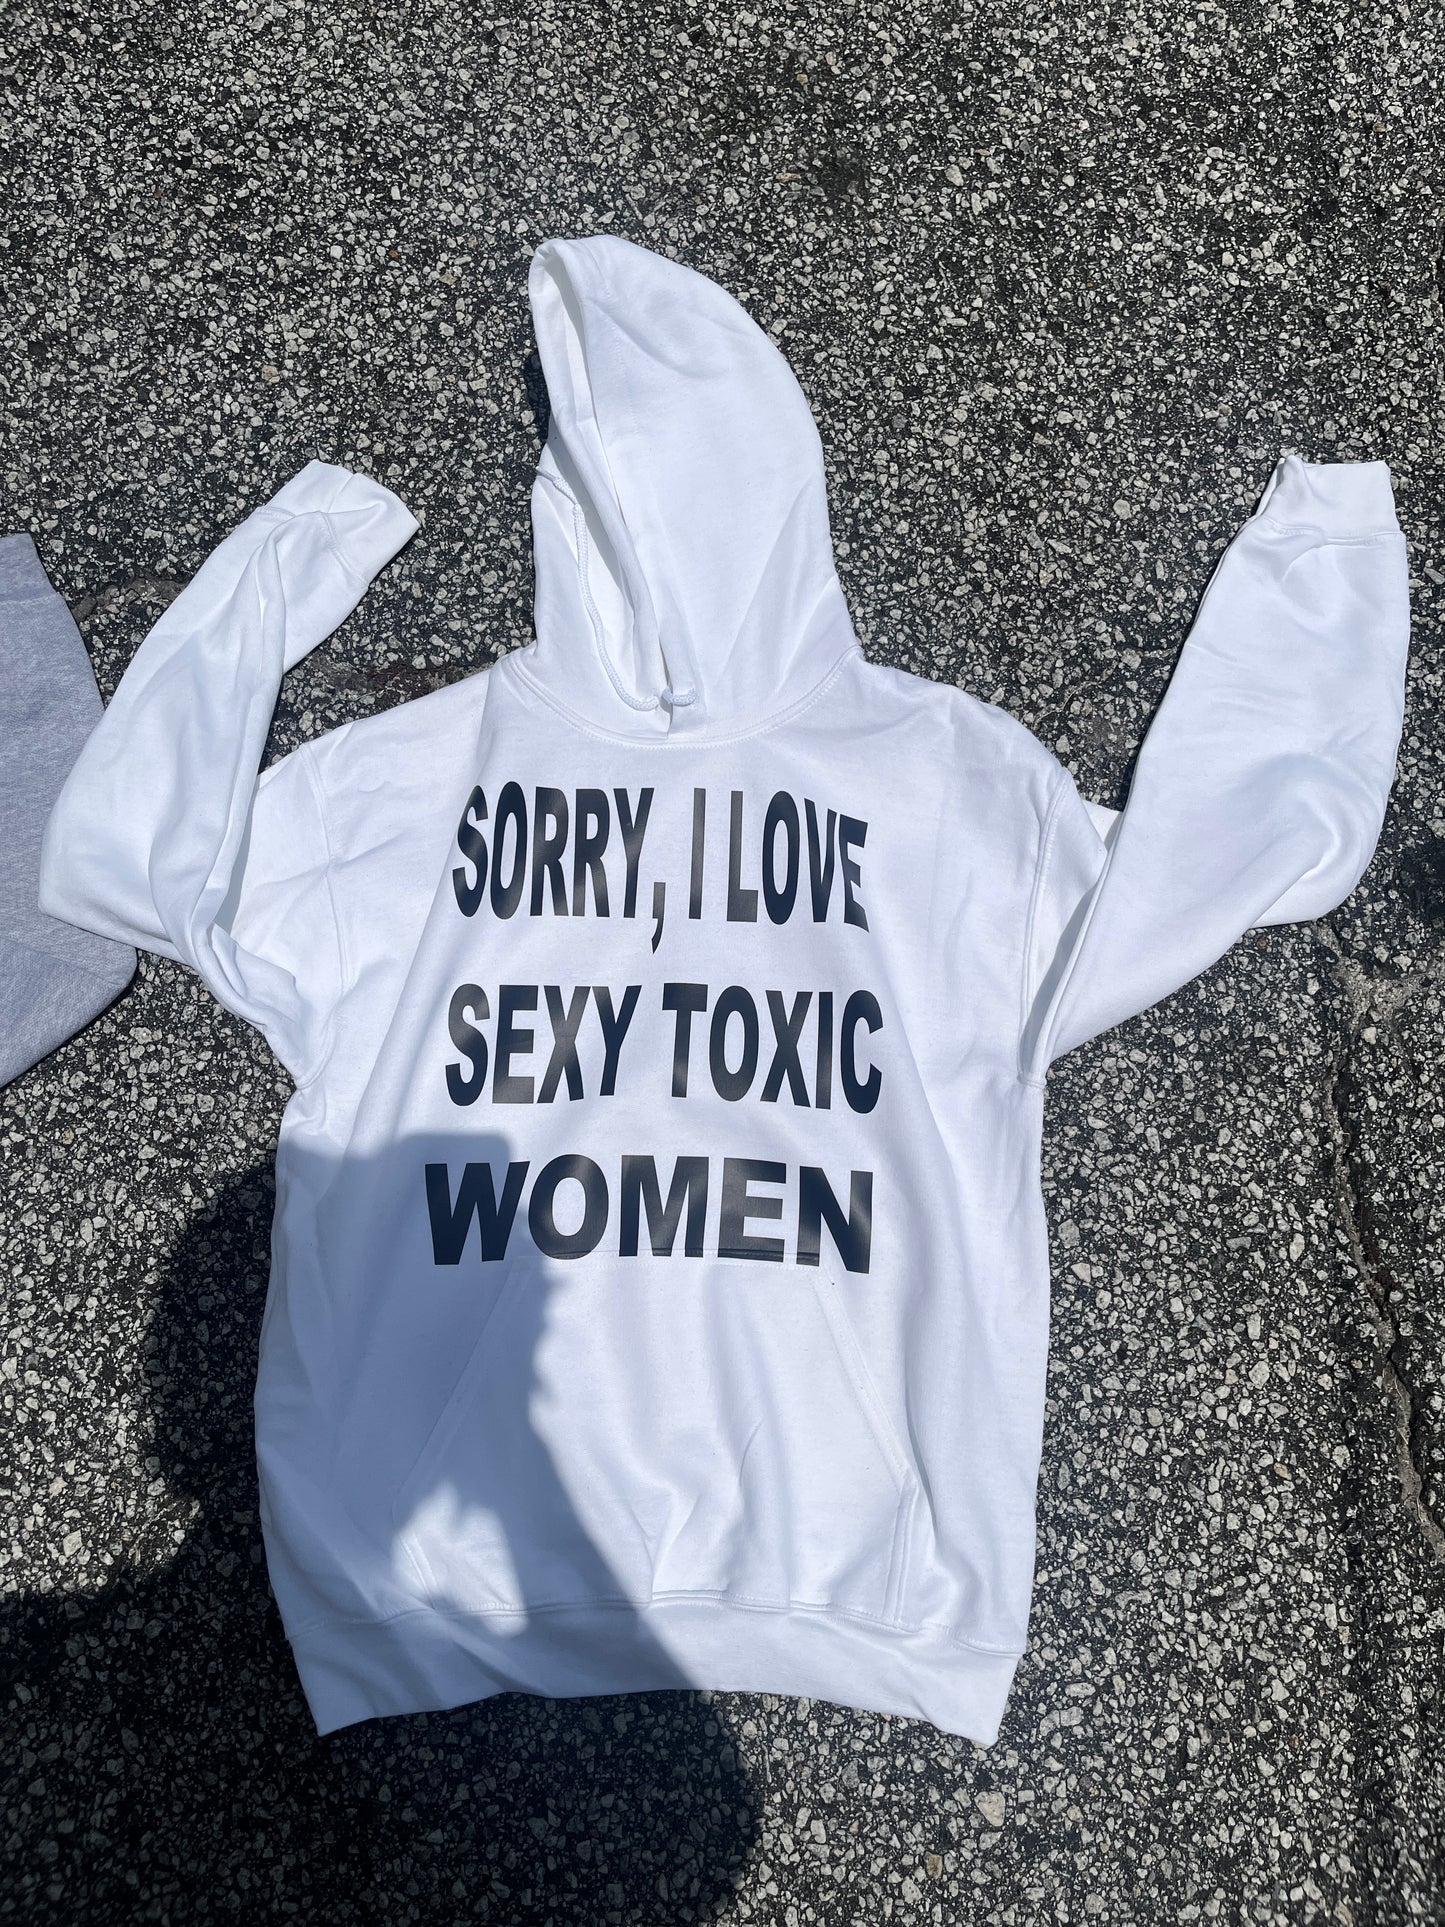 SORRY I LOVE TOXIC SEXY WOMEN HOODIE